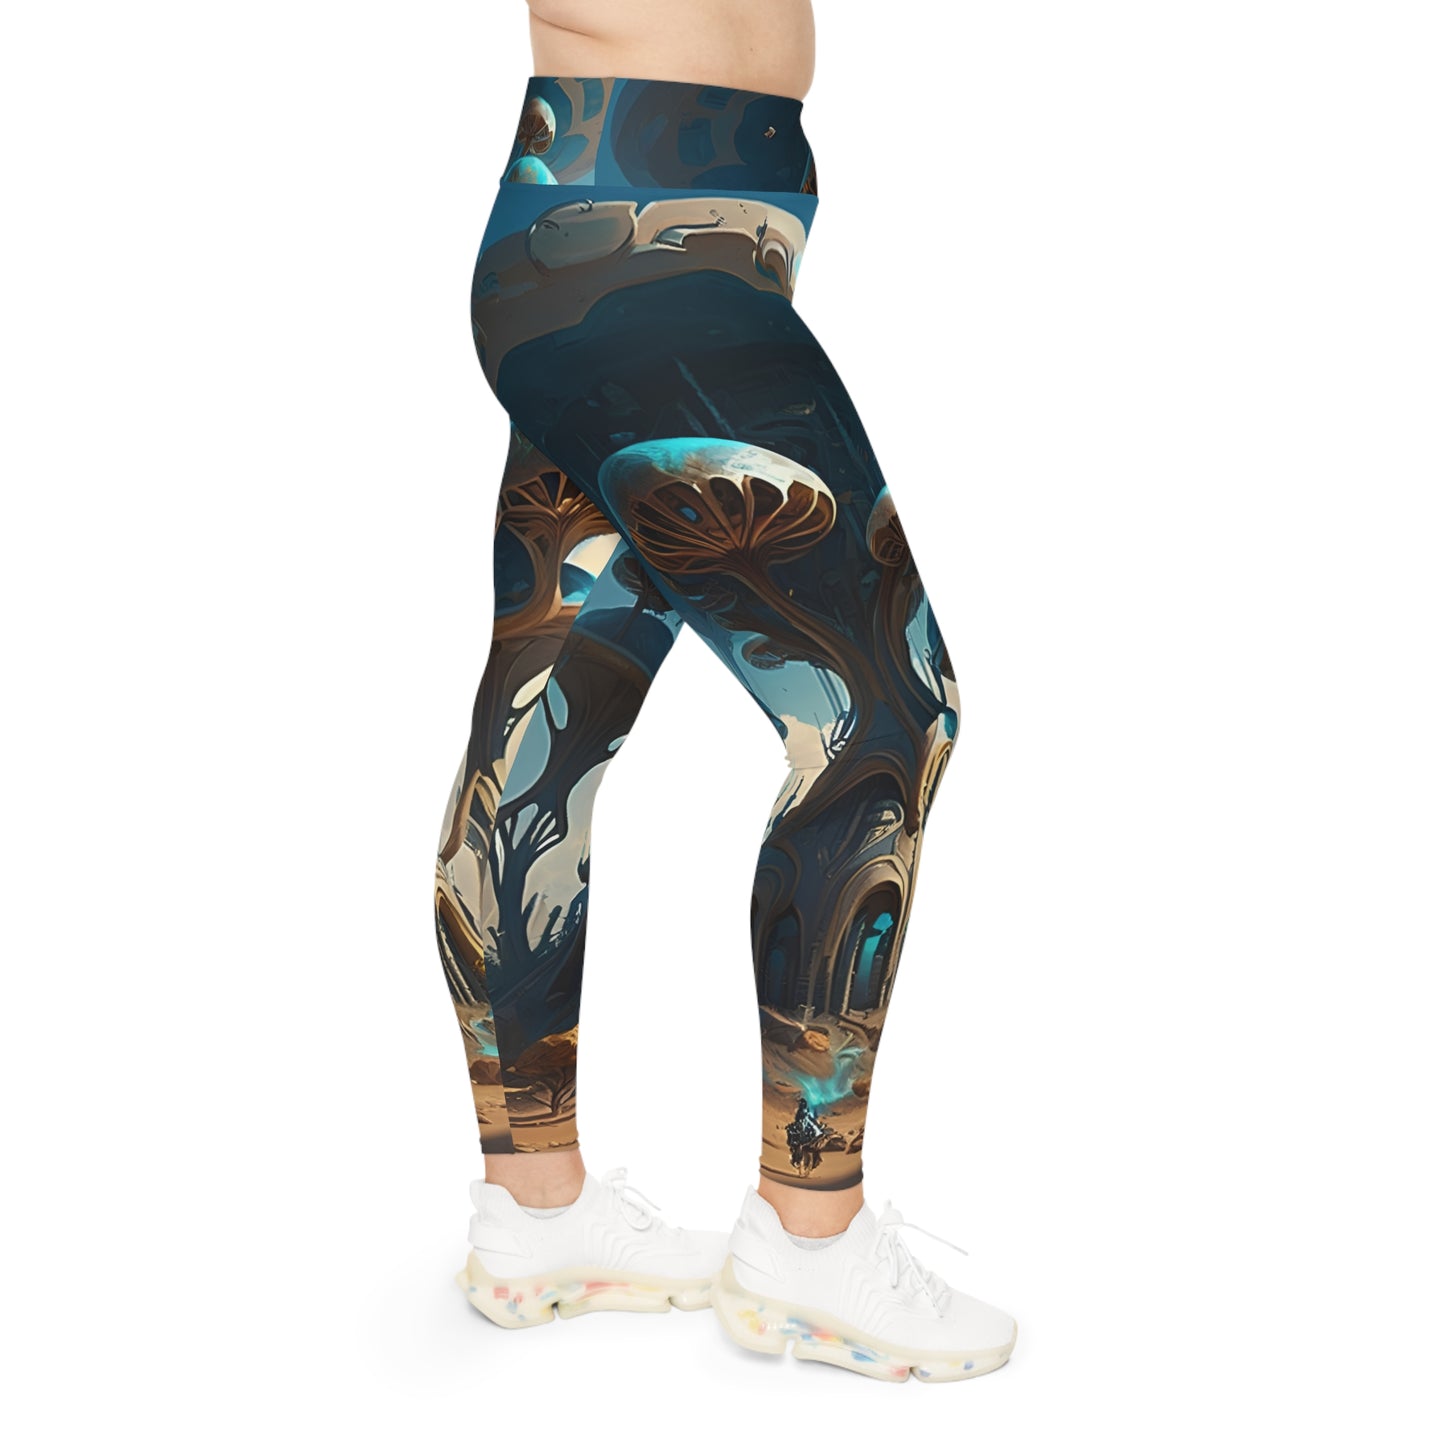 Plus Size Leggings - Futuristic Mushrooms - Magical Mystical Unique Fashion - 4-Way Stretch, High-Rise Waistband, Statement Piece, Yoga Pants, Woman Girl